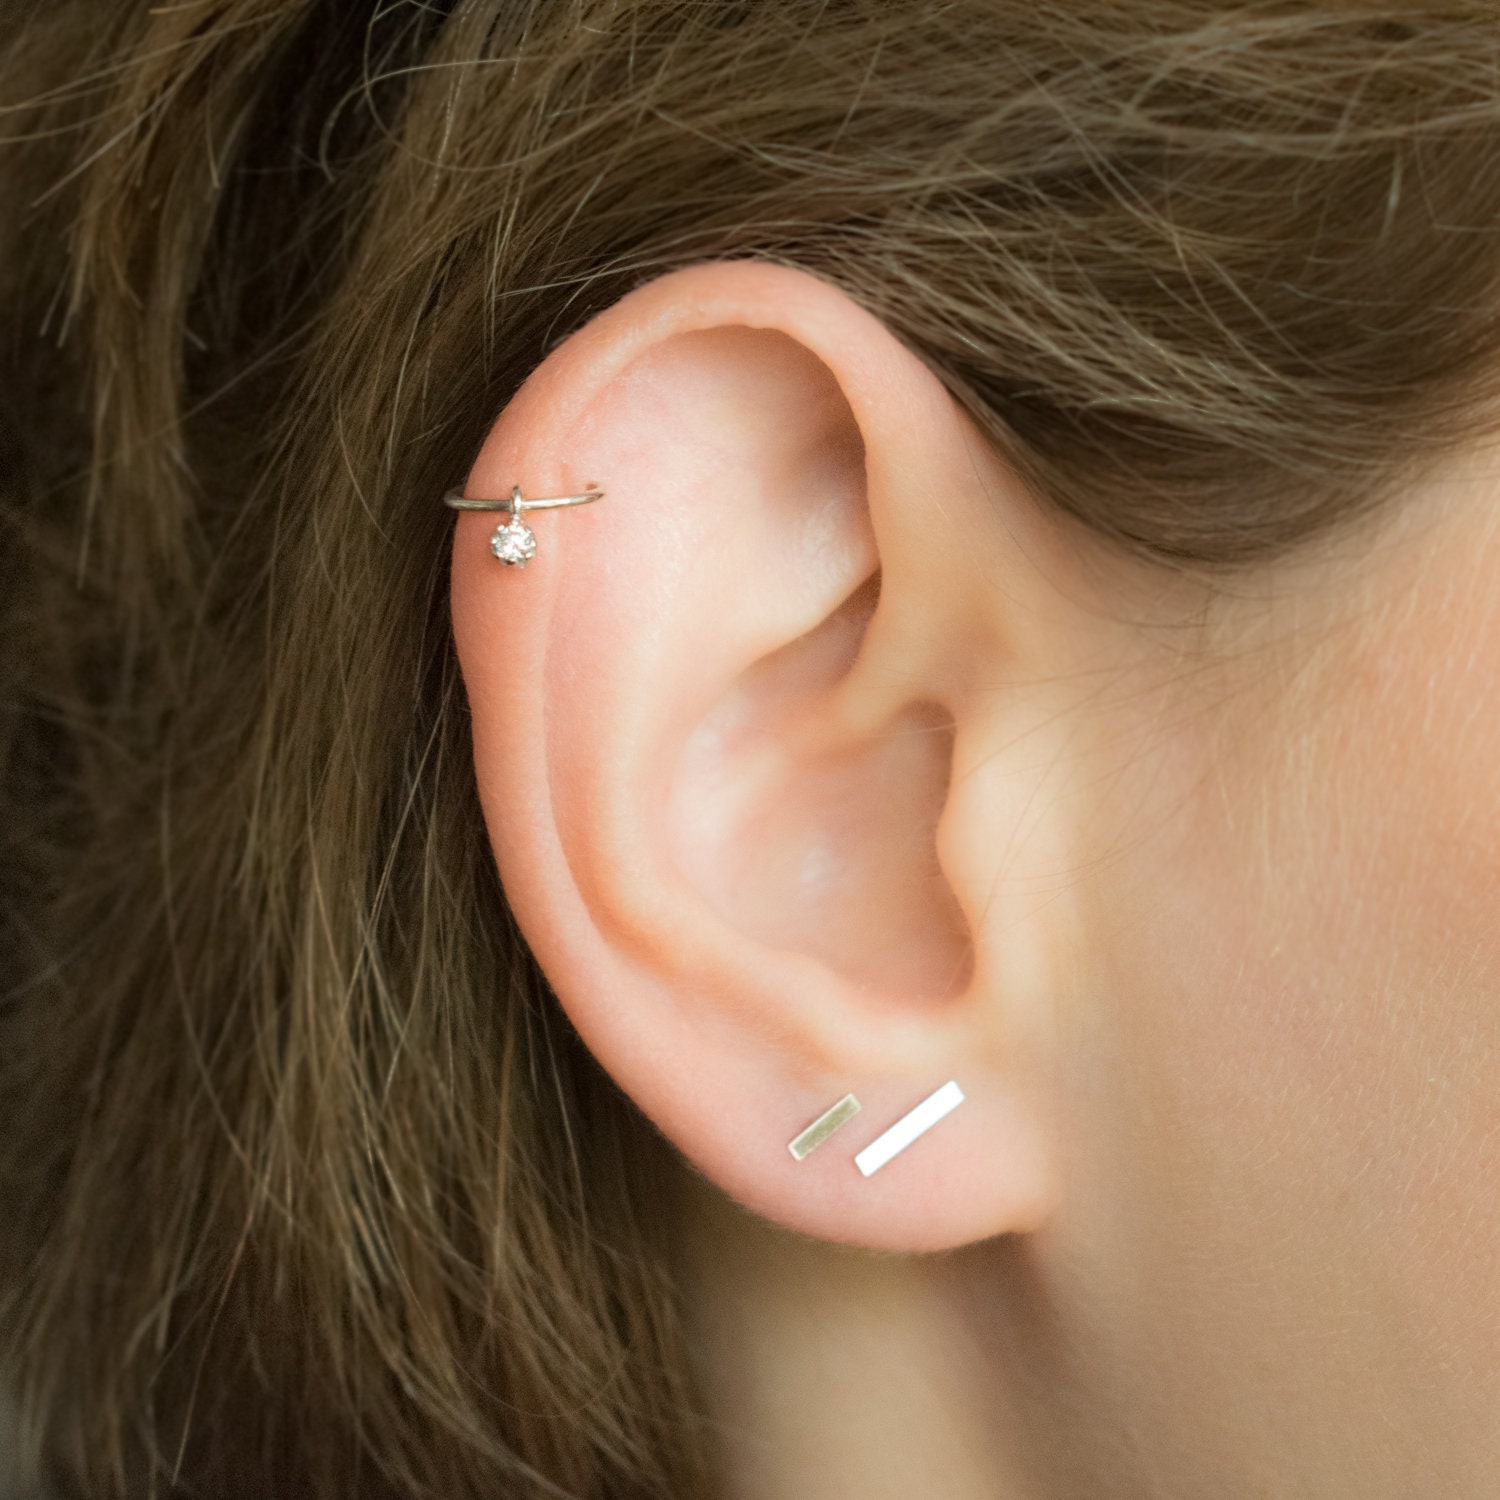 Buy Helix Piercing Helix Earring Silver Diamonds Cartilage Online in India   Etsy